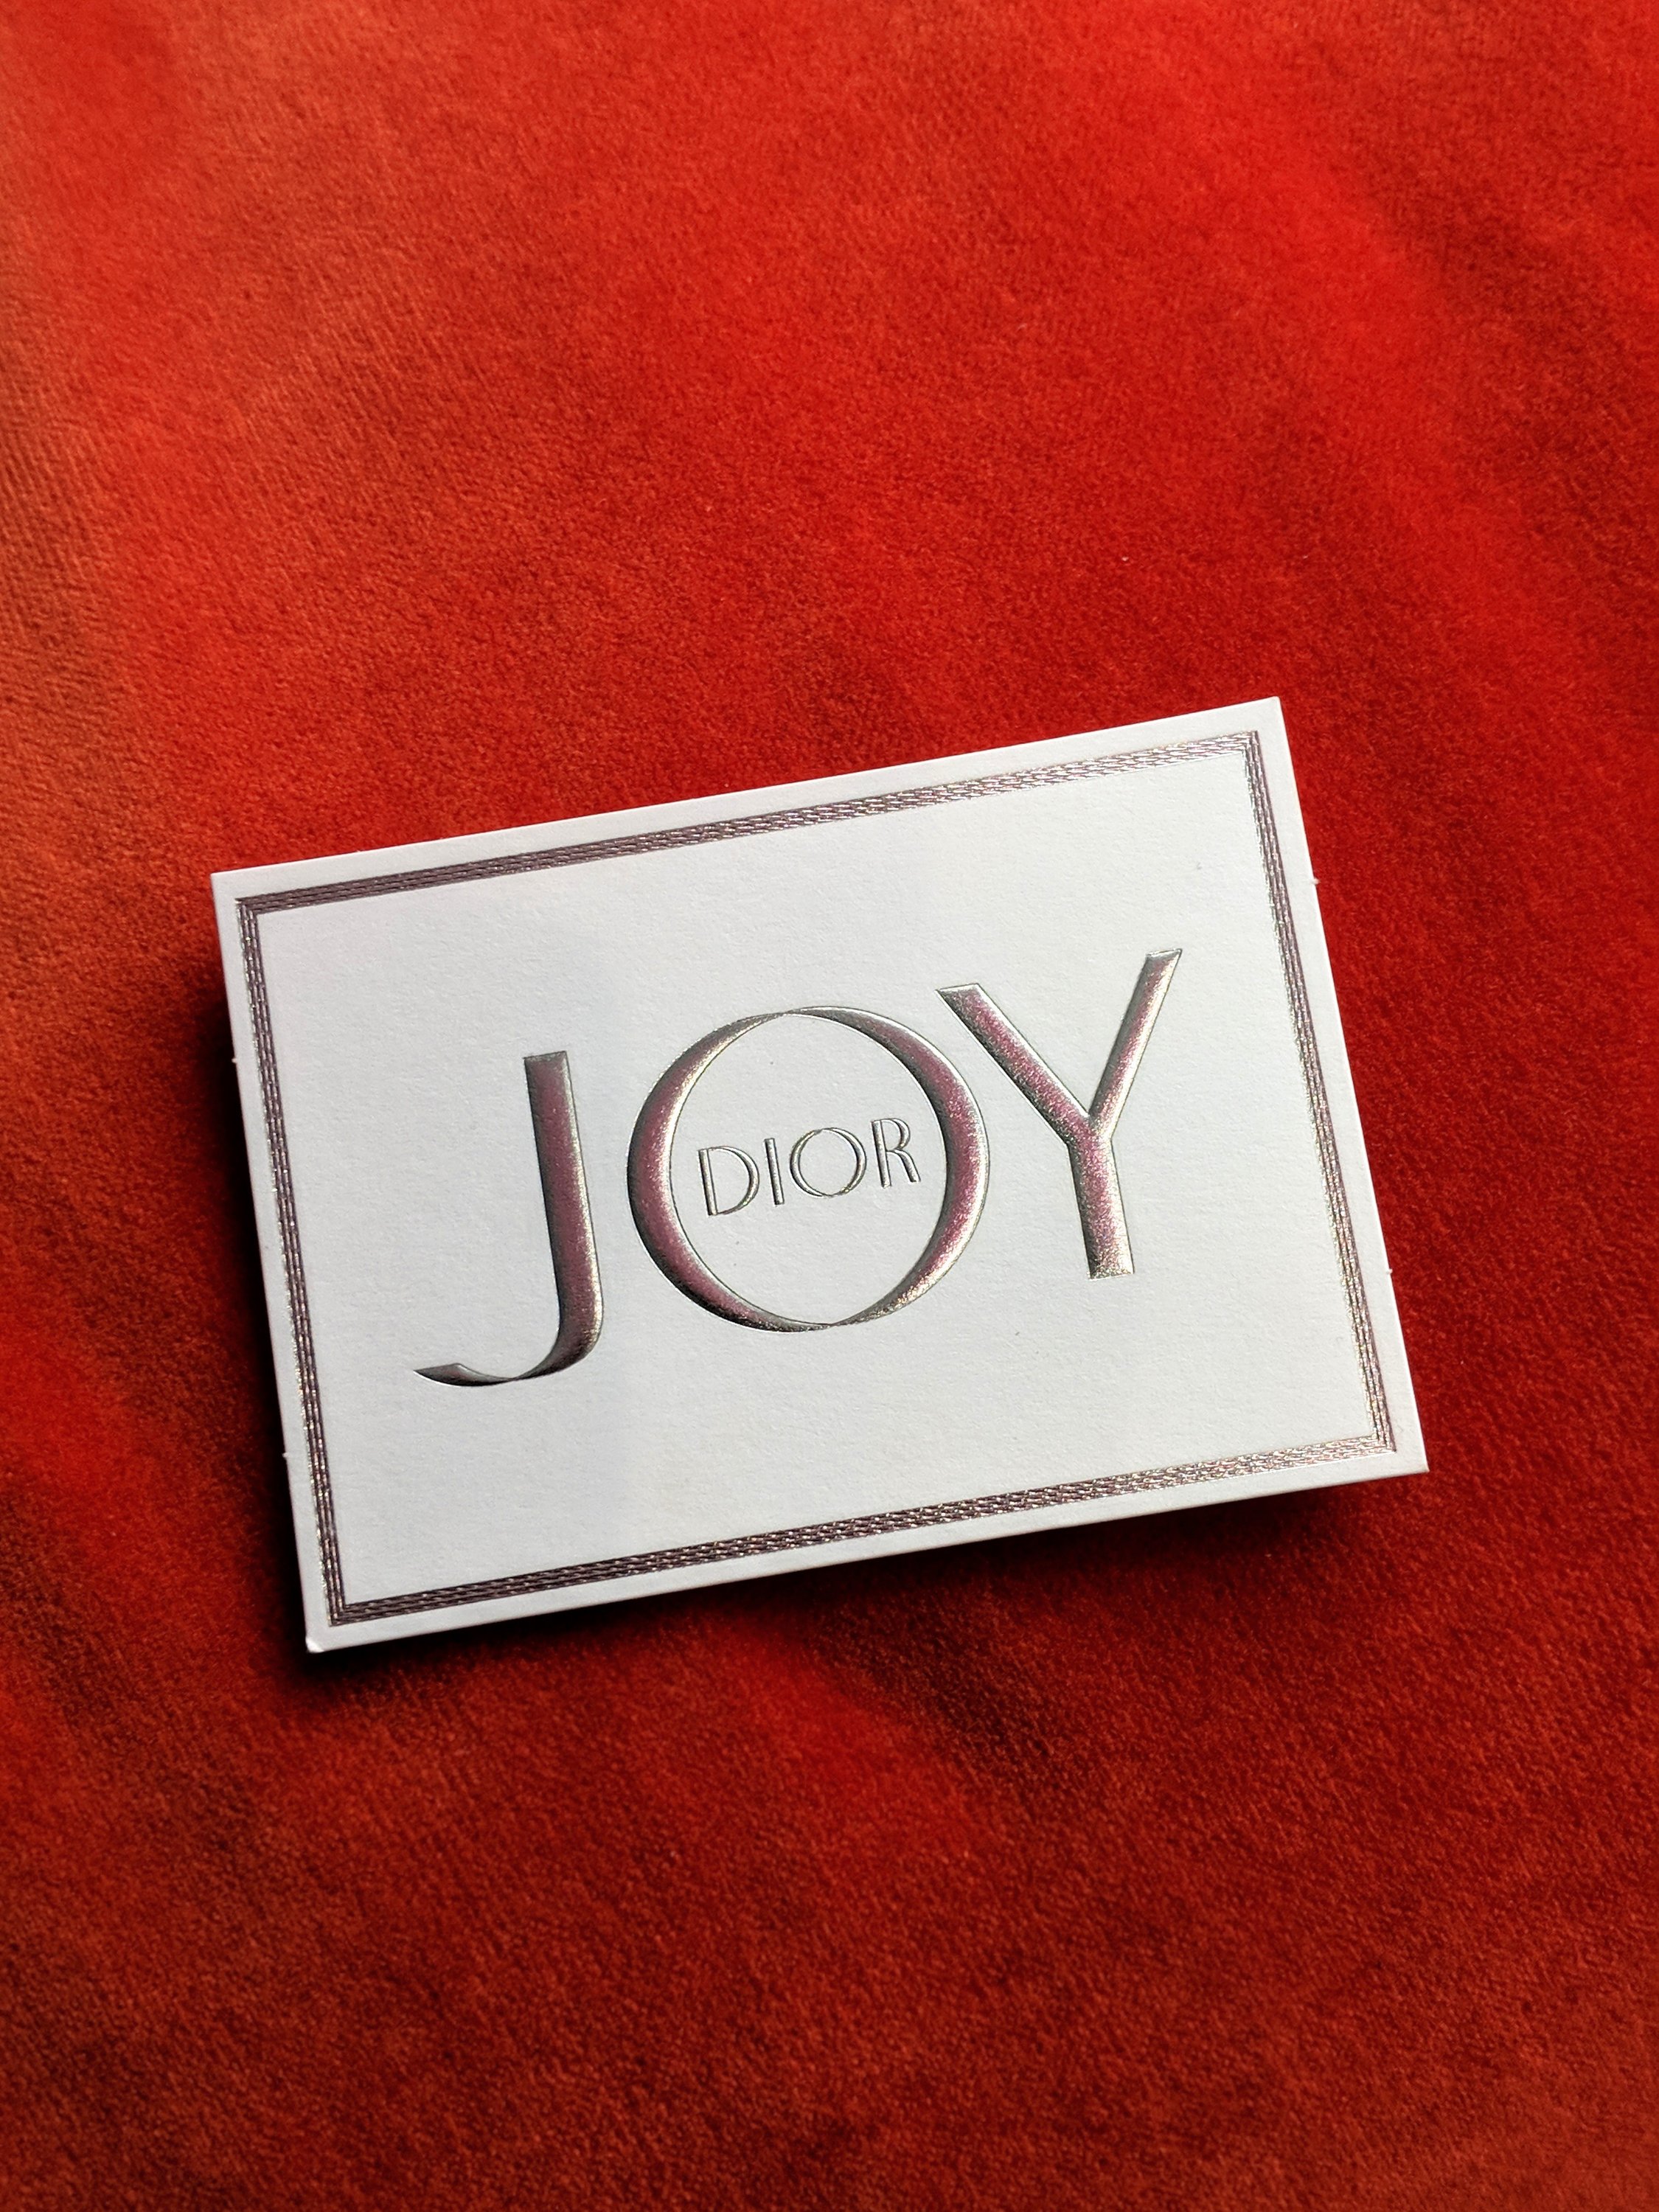 Joy from dior.